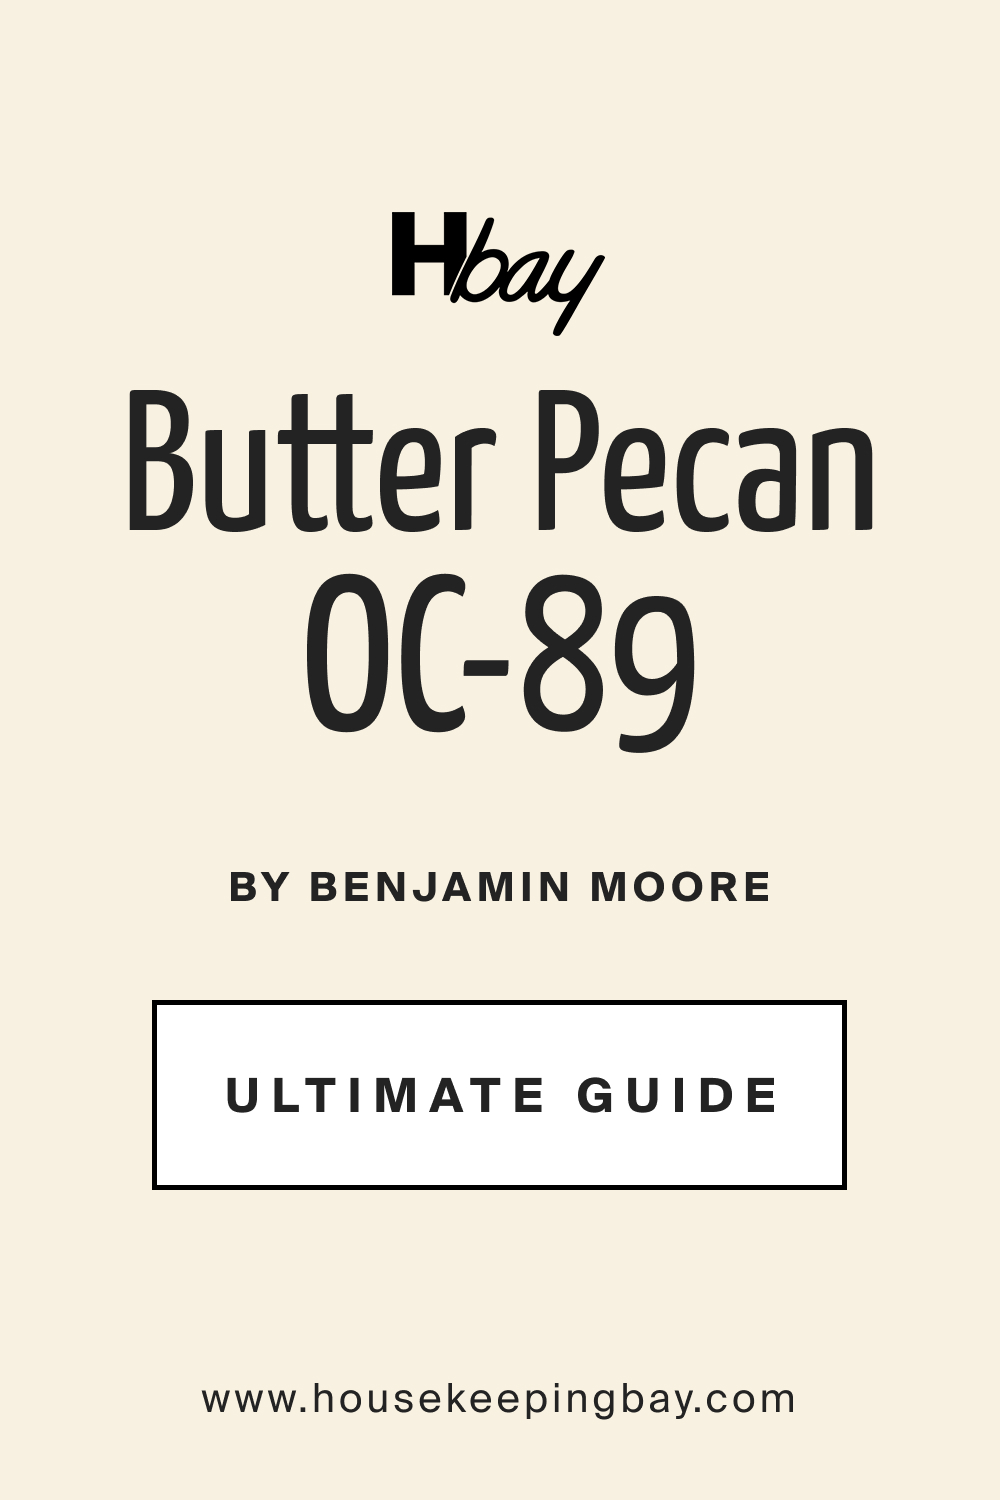 Butter Pecan OC 89 by Benjamin Moore Ultimate Guide